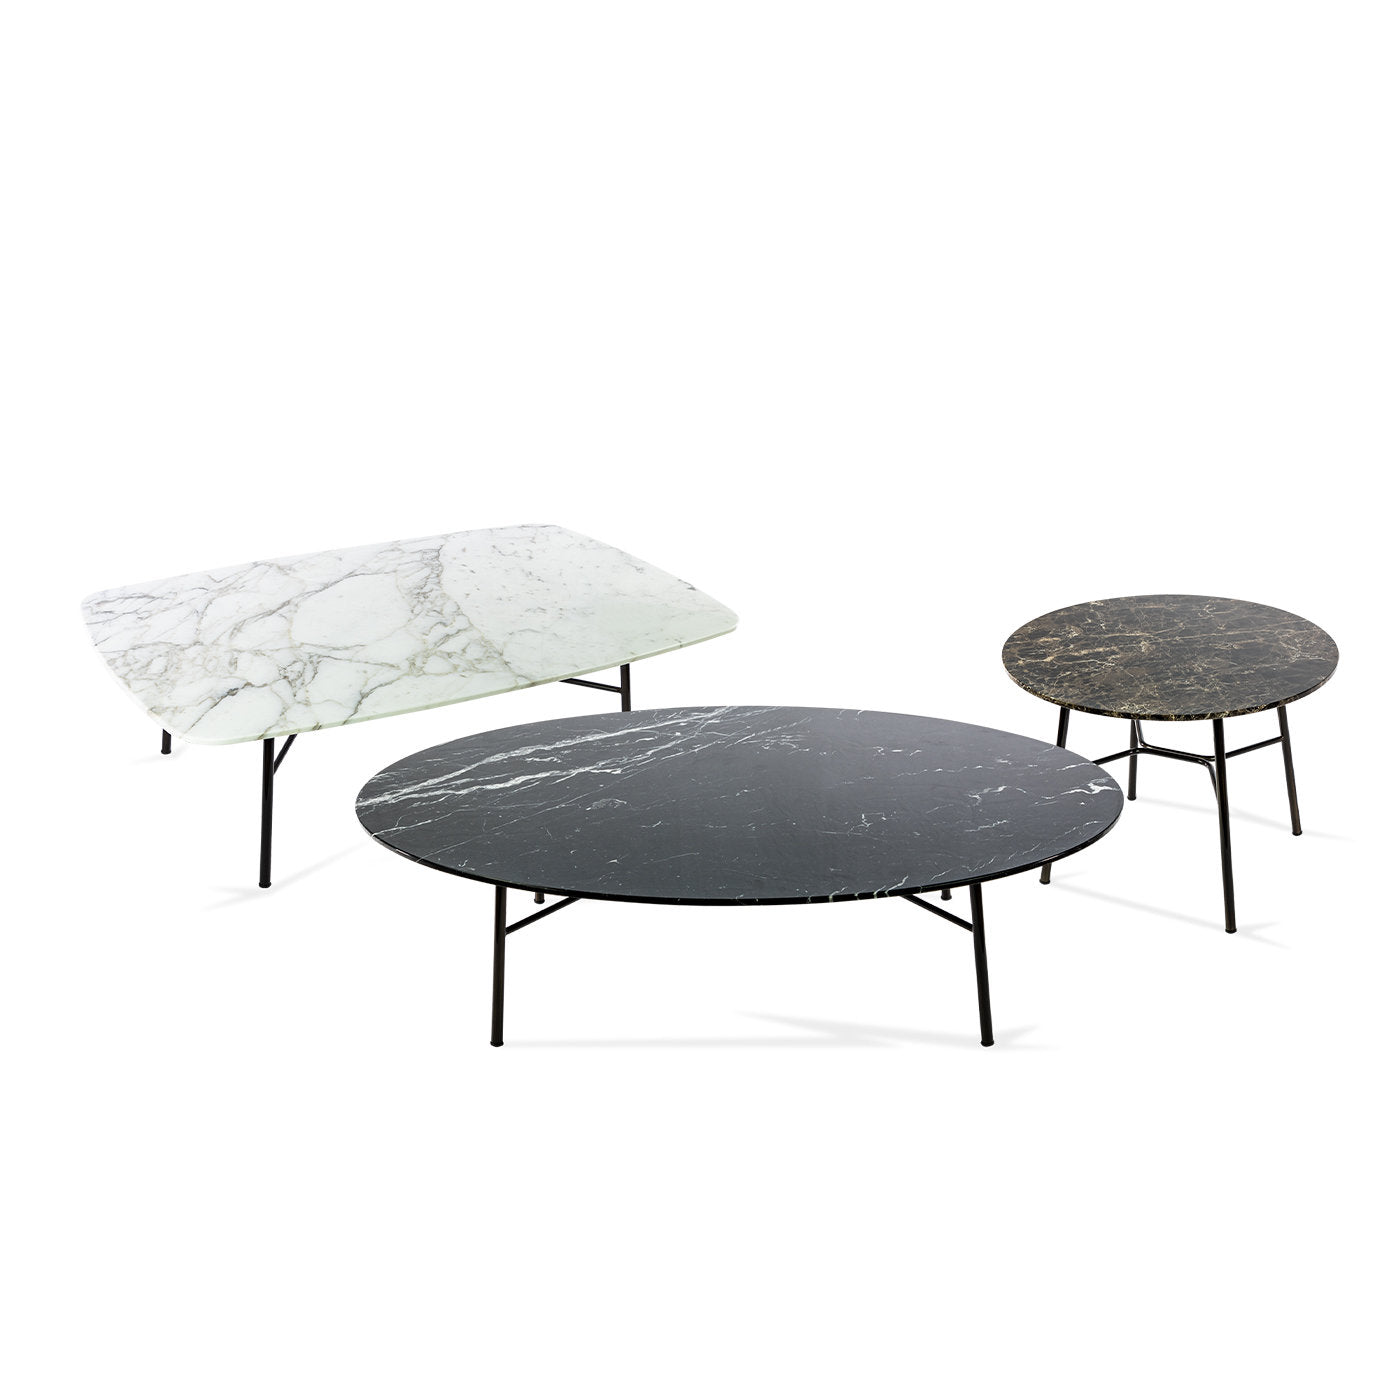 Yuki Rectangular Coffee Table with White Carrara Top # 2 by Ep Studio - Alternative view 3